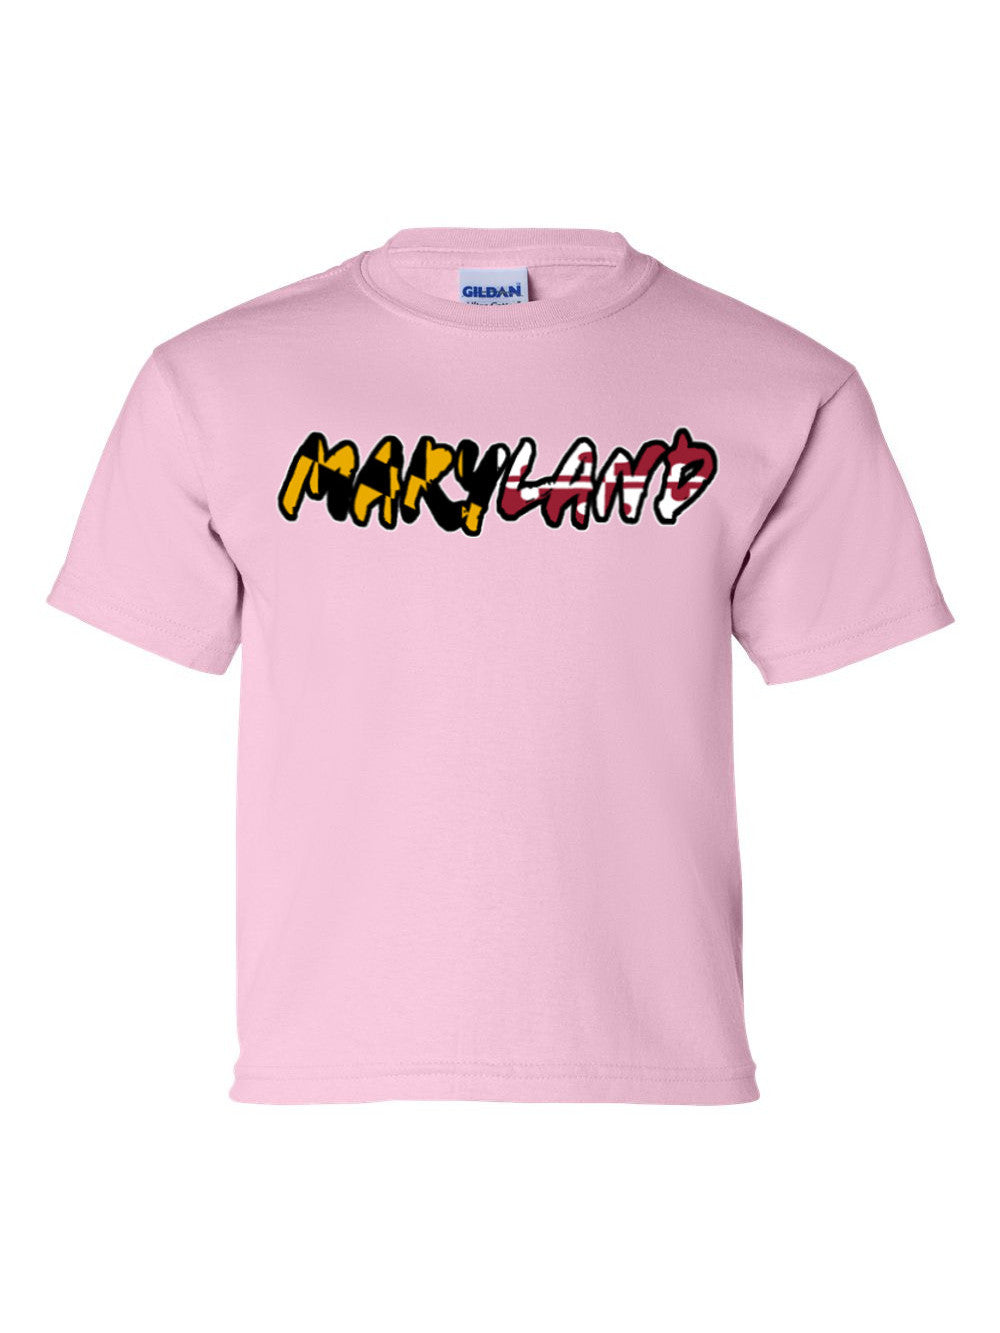 Youth Maryland Brushstroke T-Shirt (Pink)